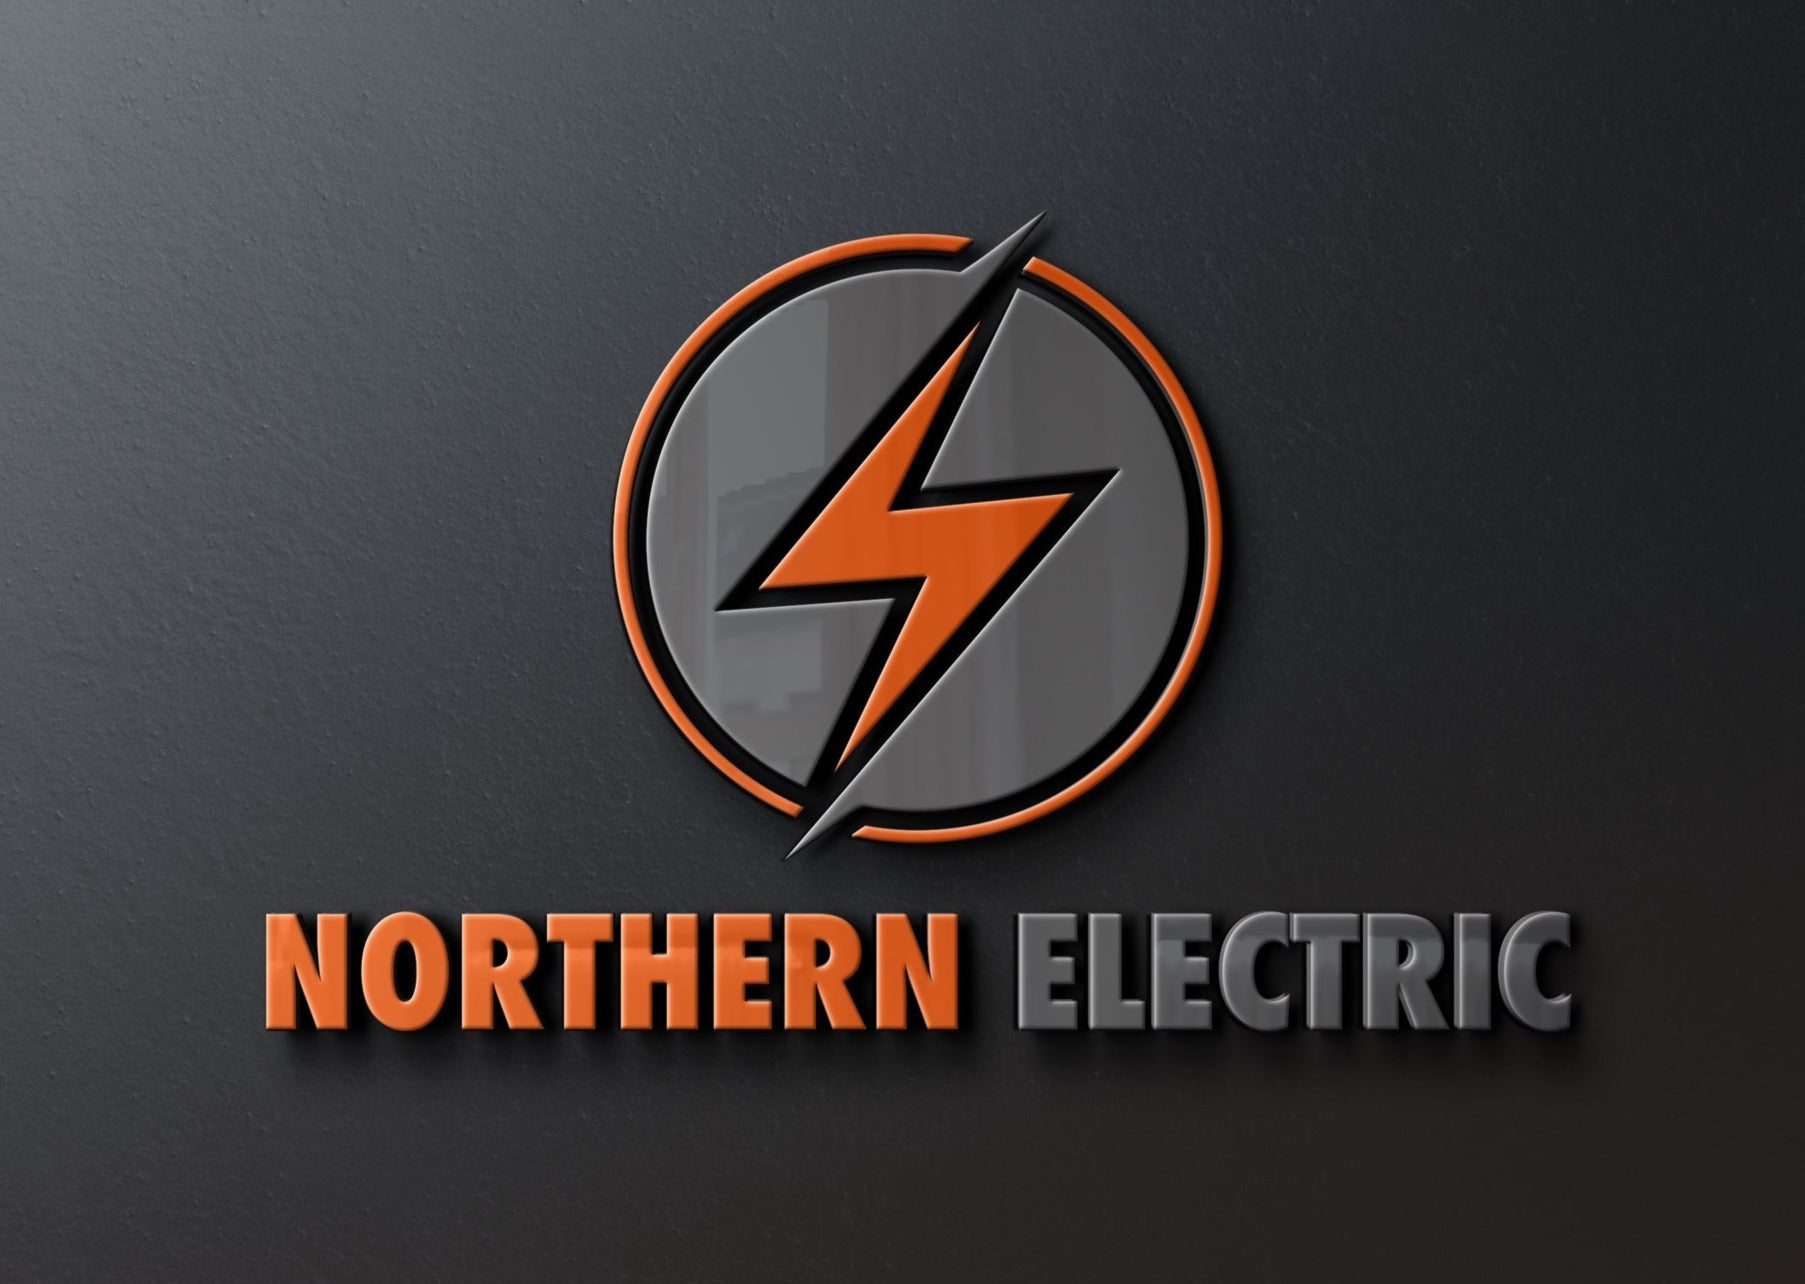 Lightning bolt logo. Electricity and flash symbols power emb